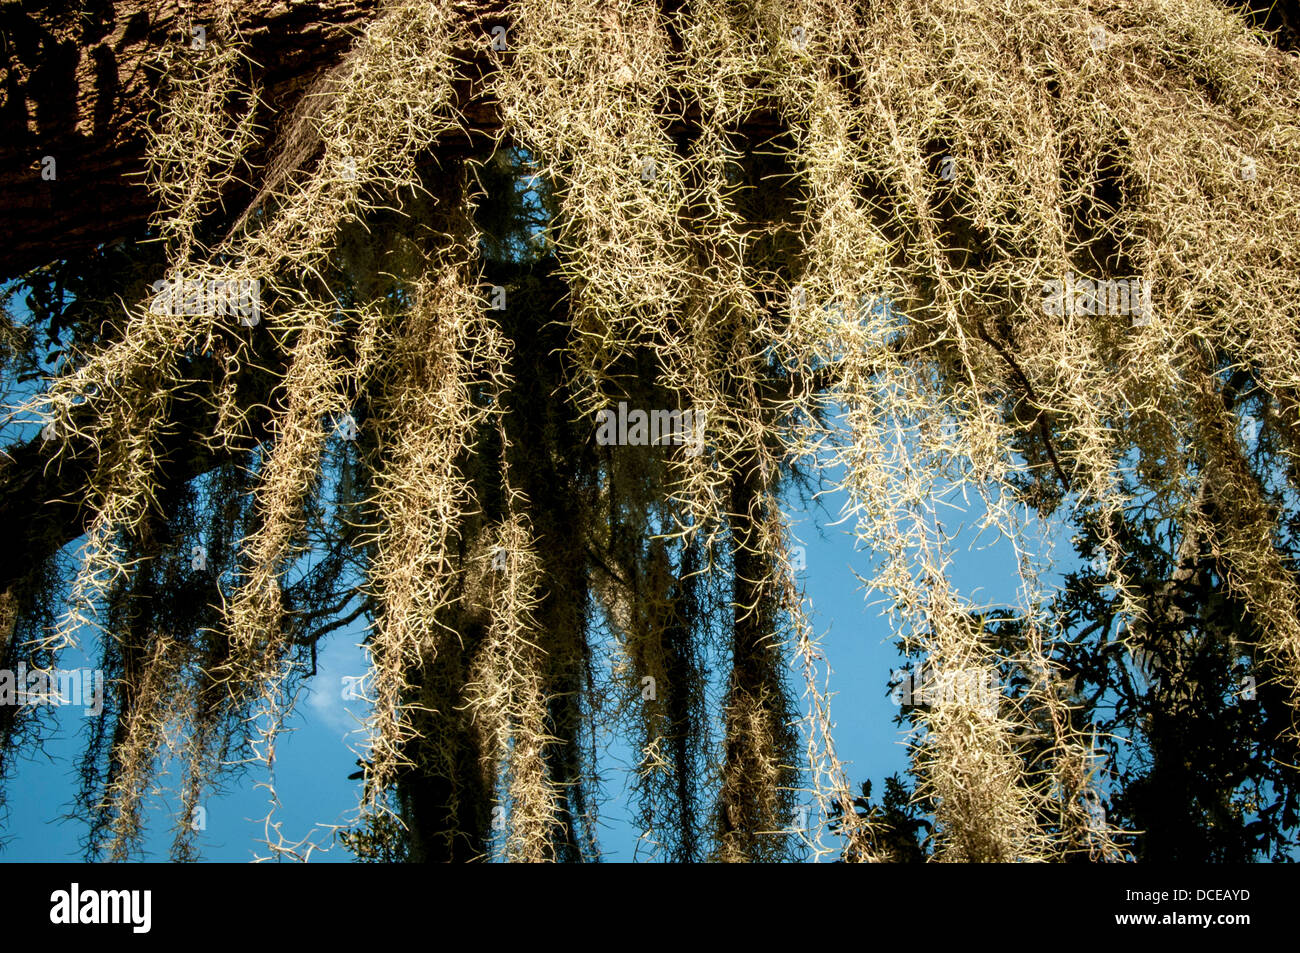 USA, Louisiana, Atchafalaya Basin, Jefferson Island, Rip Van Winkle Gardens, Spanish moss in live oak tree. Stock Photo